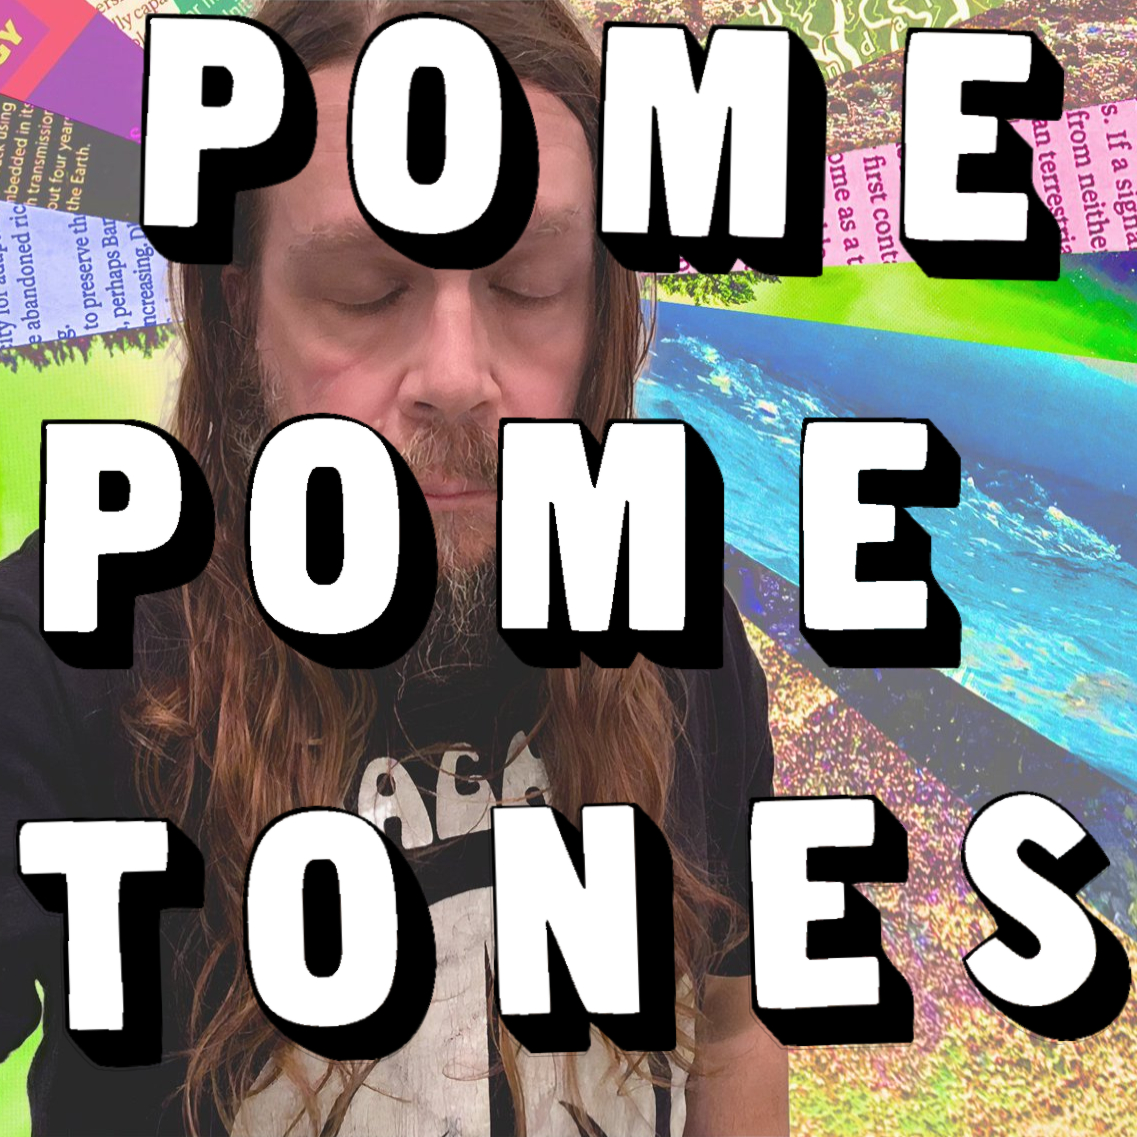 Jeffrey Alexander - Pome Pome Tones